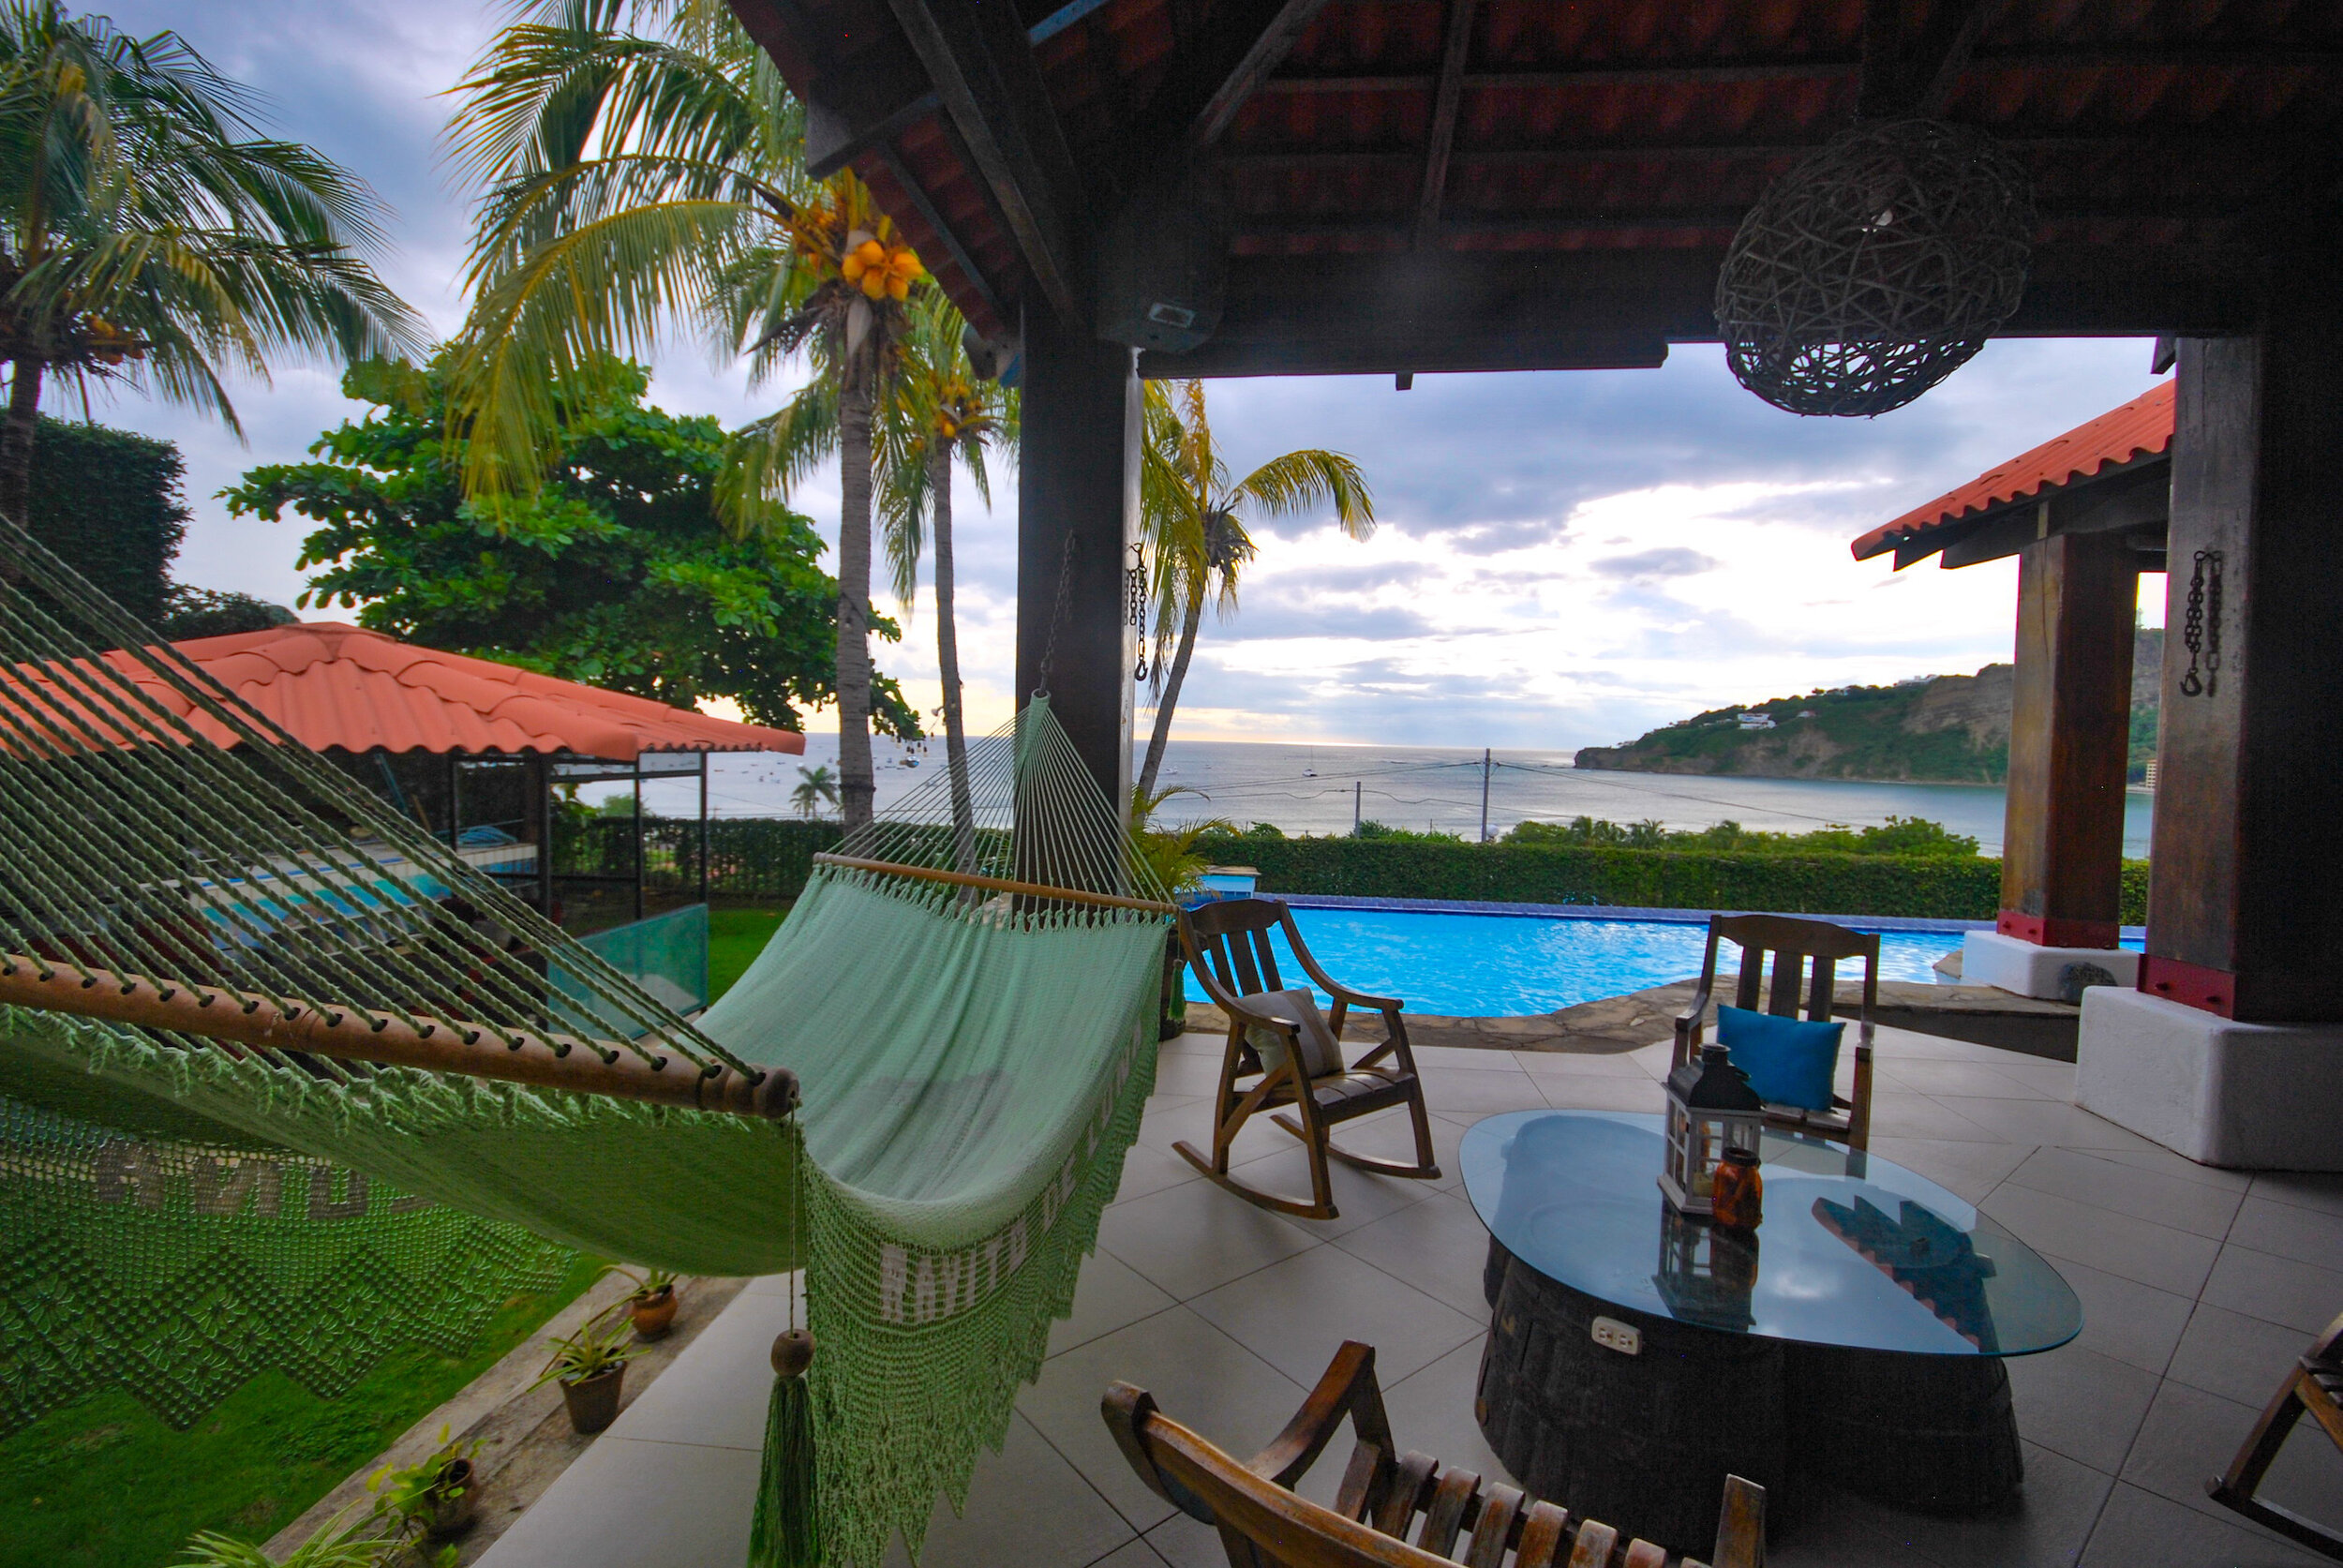 Hotel Resort For Sale San Juan Del Sur Nicaragua 26.JPEG